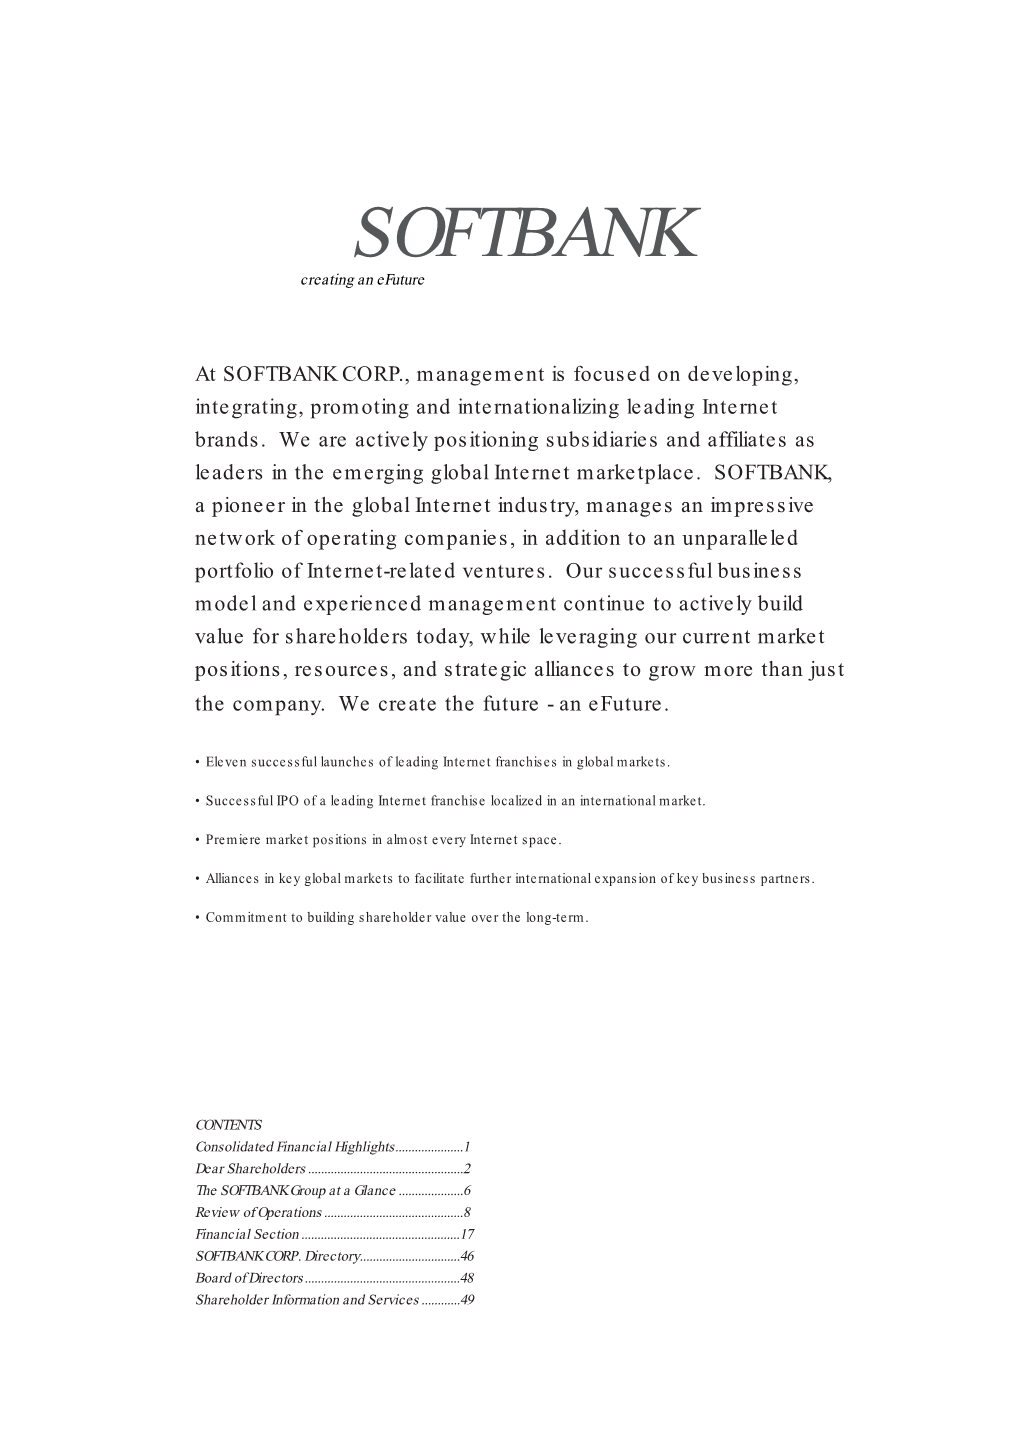 Softbank Corp. Annual Report 1999 1 Dear Shareholders